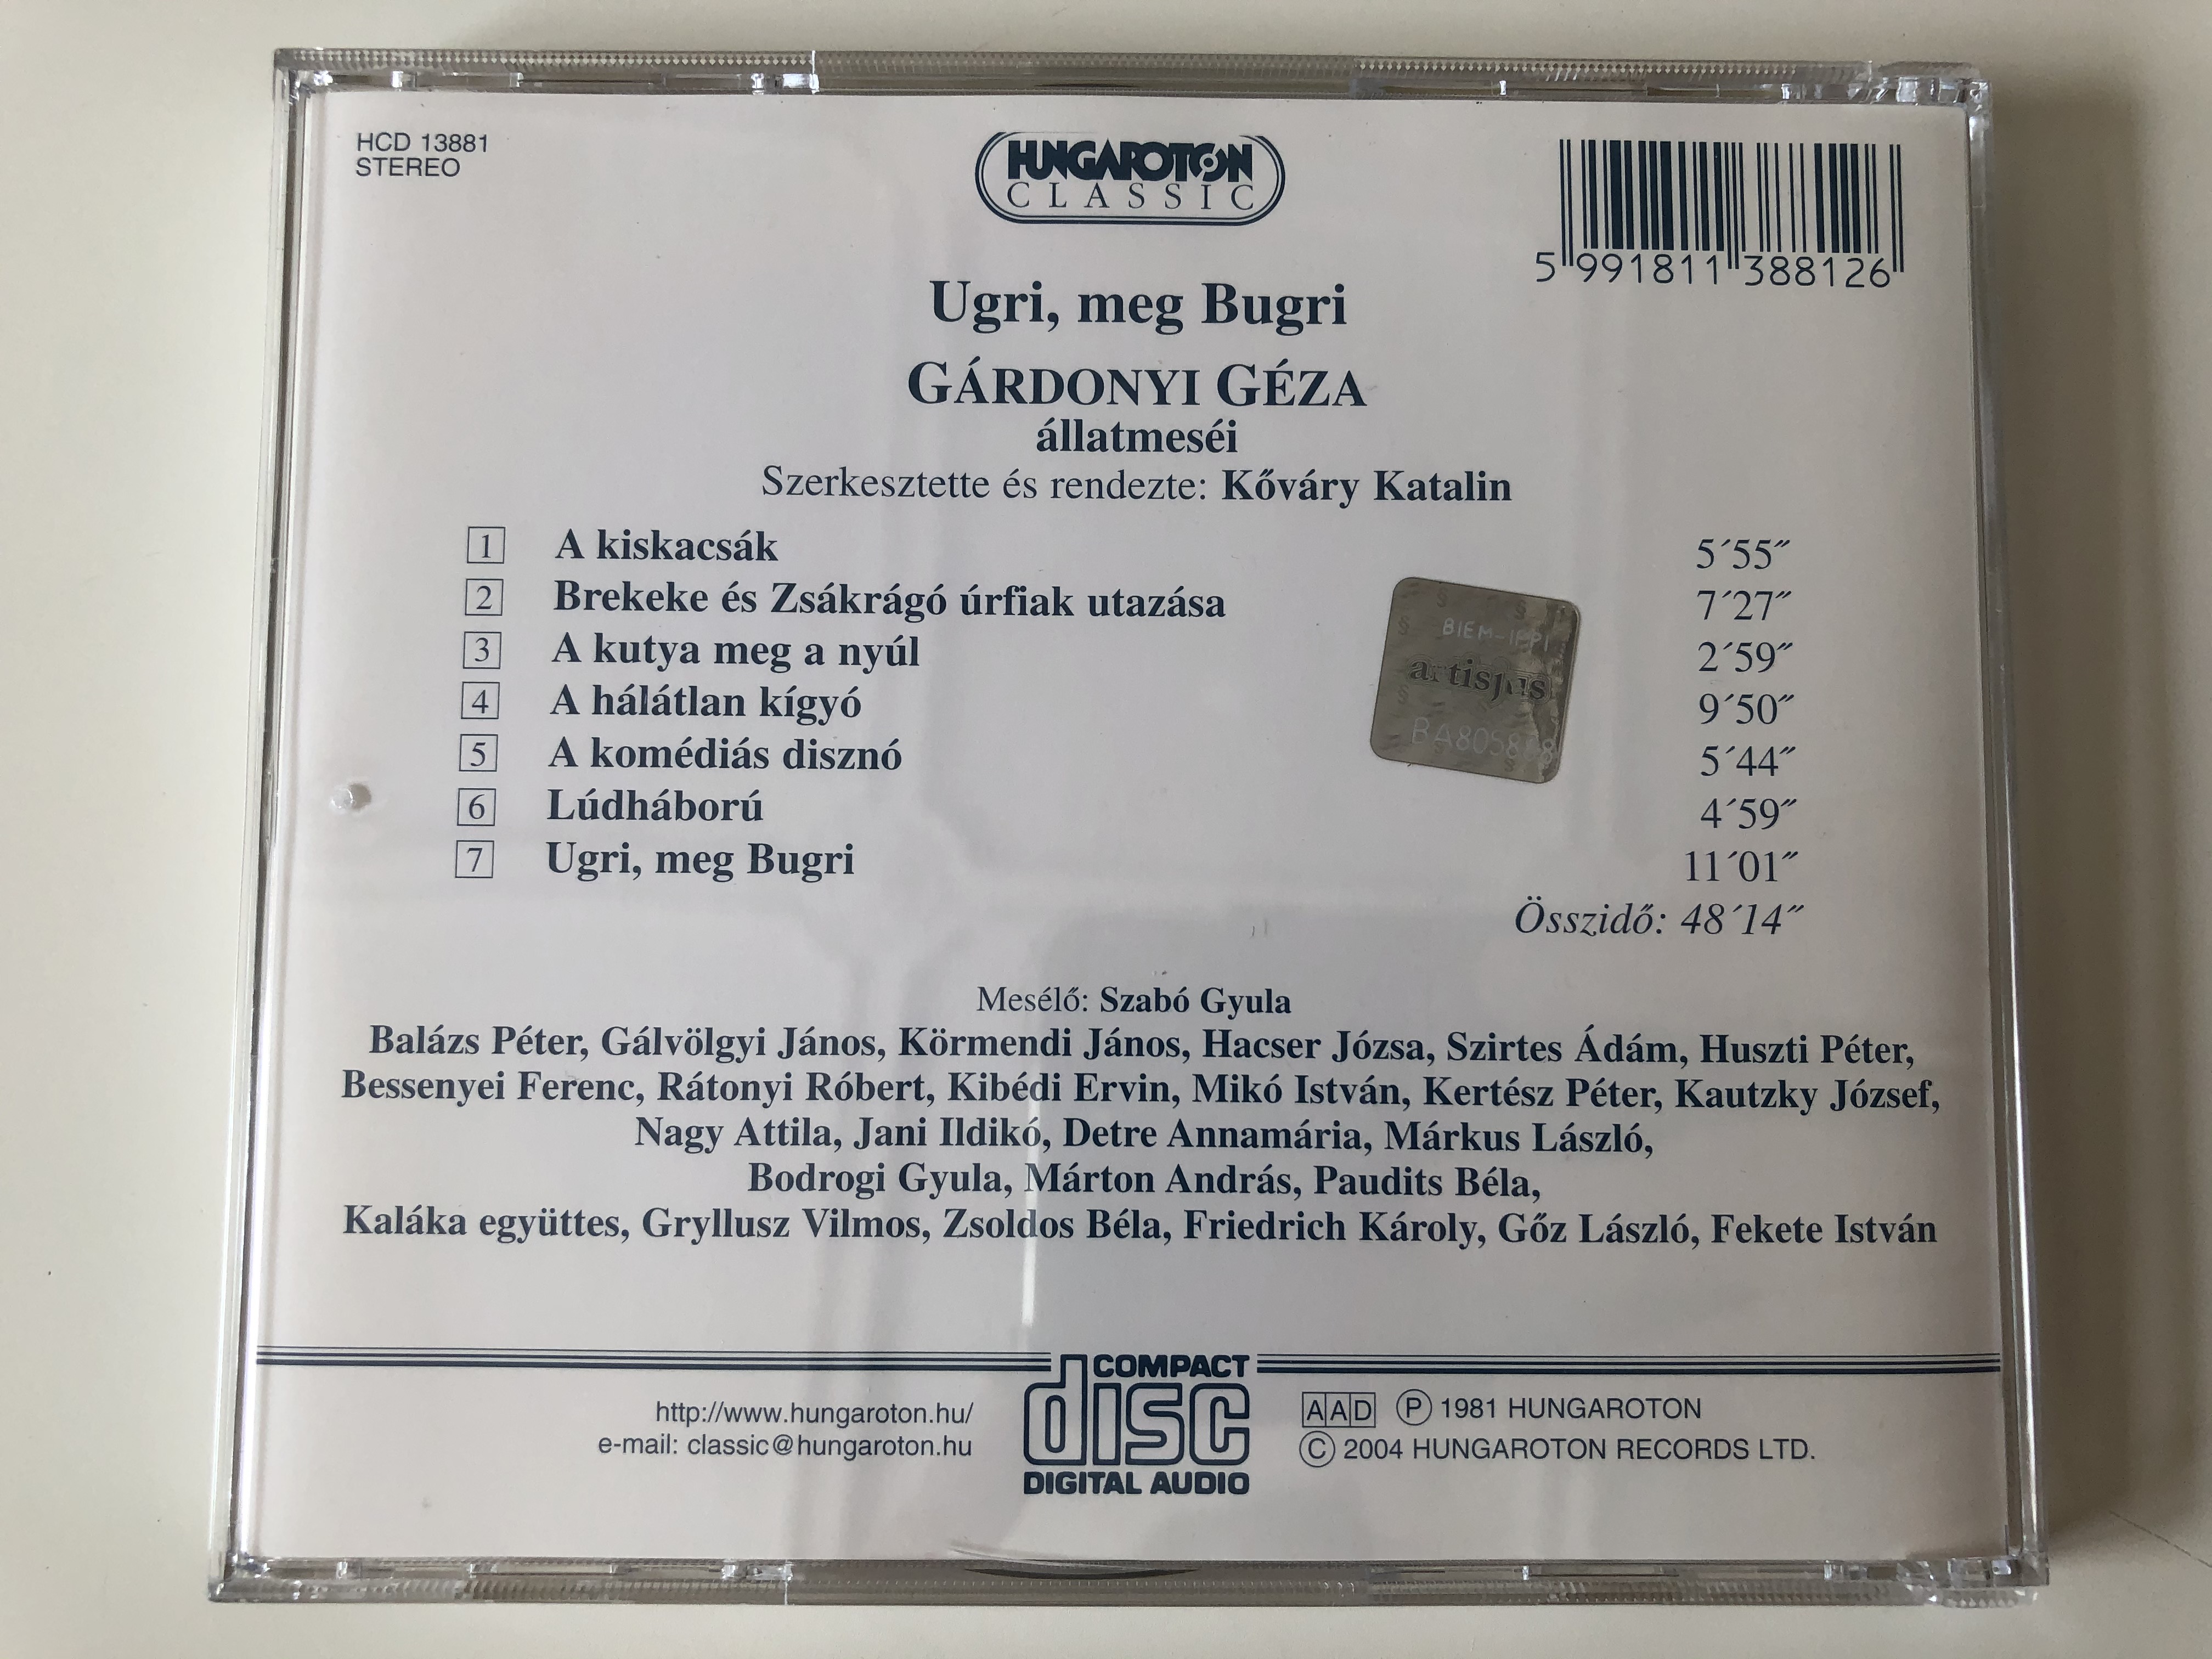 ugri-meg-bugri-g-rdonyi-g-za-llatmes-i-hungaroton-classic-audio-cd-2004-stereo-hcd-13881-4-.jpg